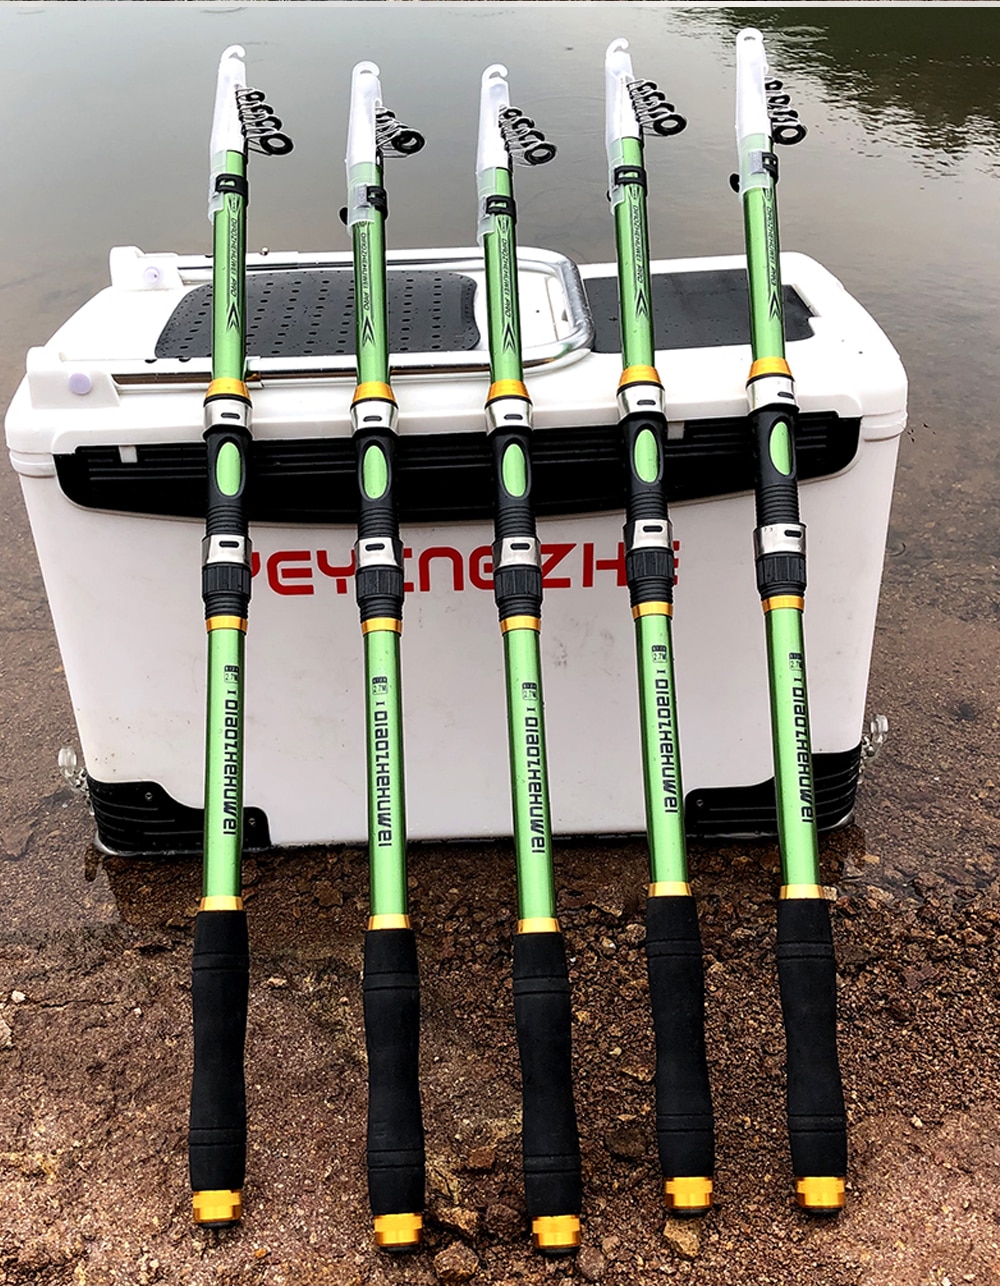 GHOTDA 2.1M -3.6M Carp Fishing Rod feeder Hard FRP Carbon Fiber Telescopic Fishing Rod fishing pole